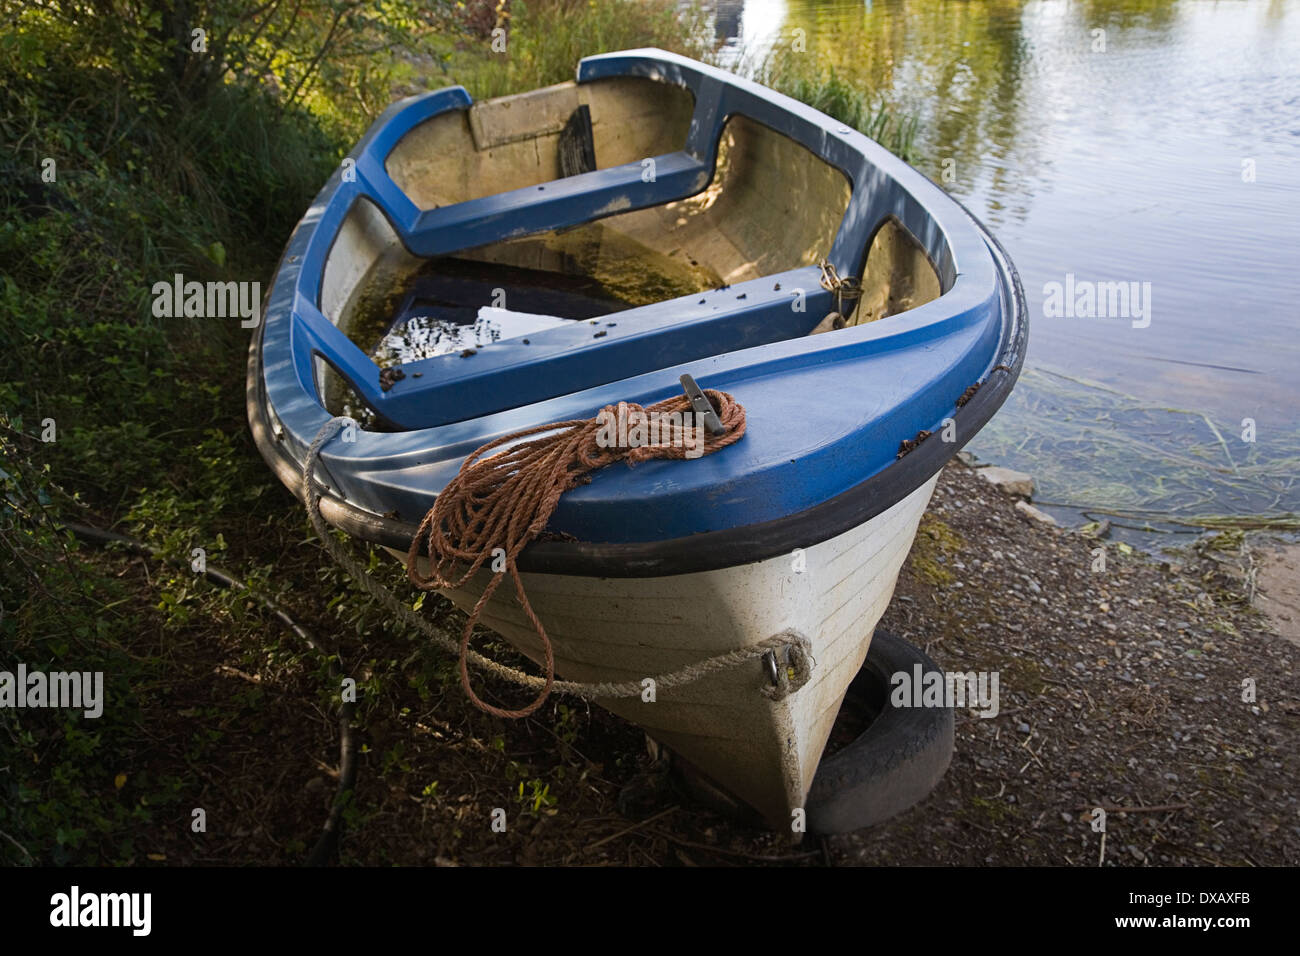 Irish lake fishing boat hi-res stock photography and images - Alamy